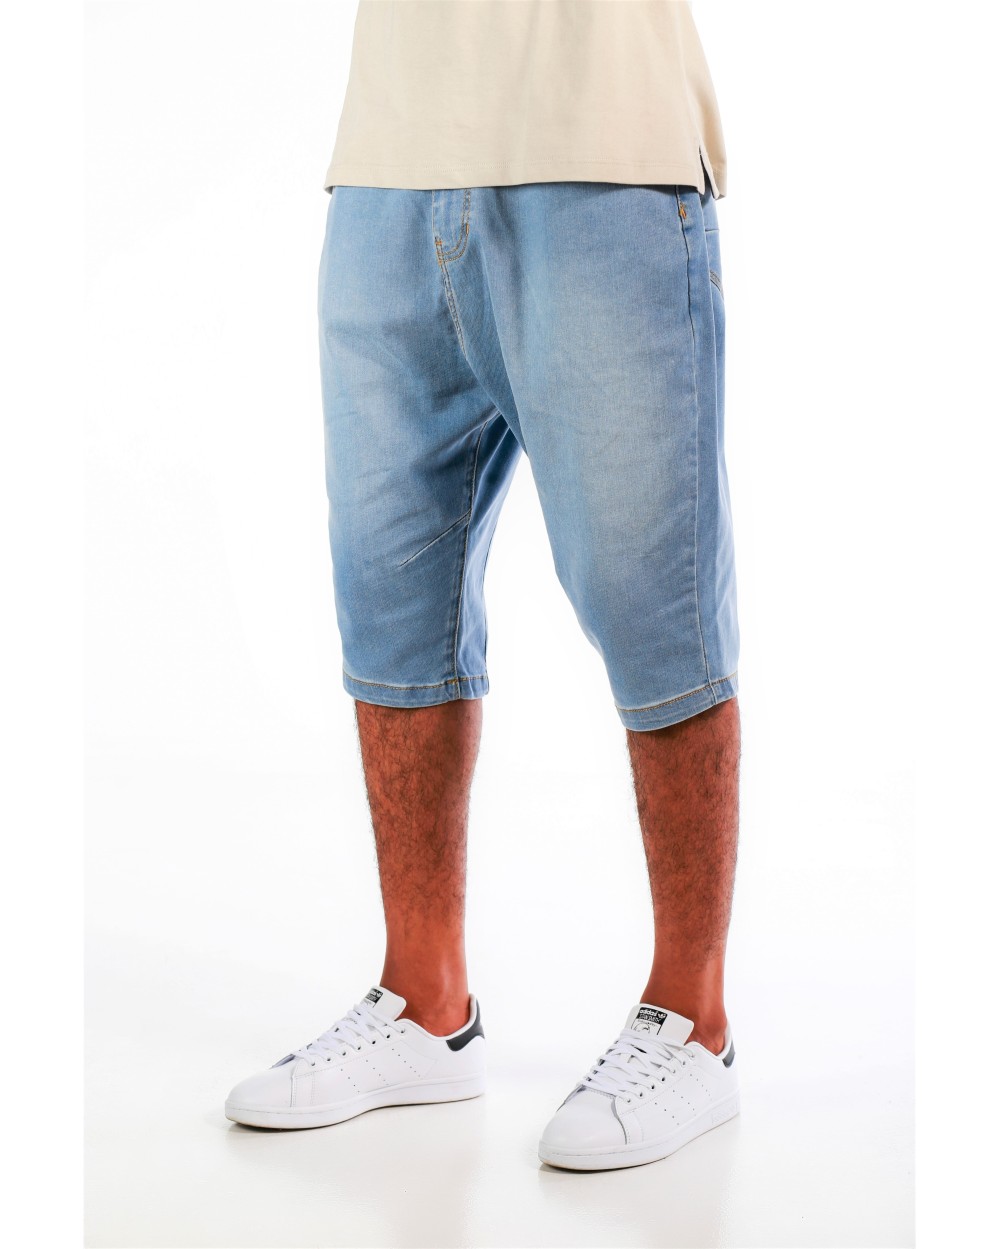 MRULIC jeans for men Men's Large Trousers Solid Summer Retro And Harem Size  Loose Color Linen Cotton Men's pants Men Harem Pants Army Green + M -  Walmart.com